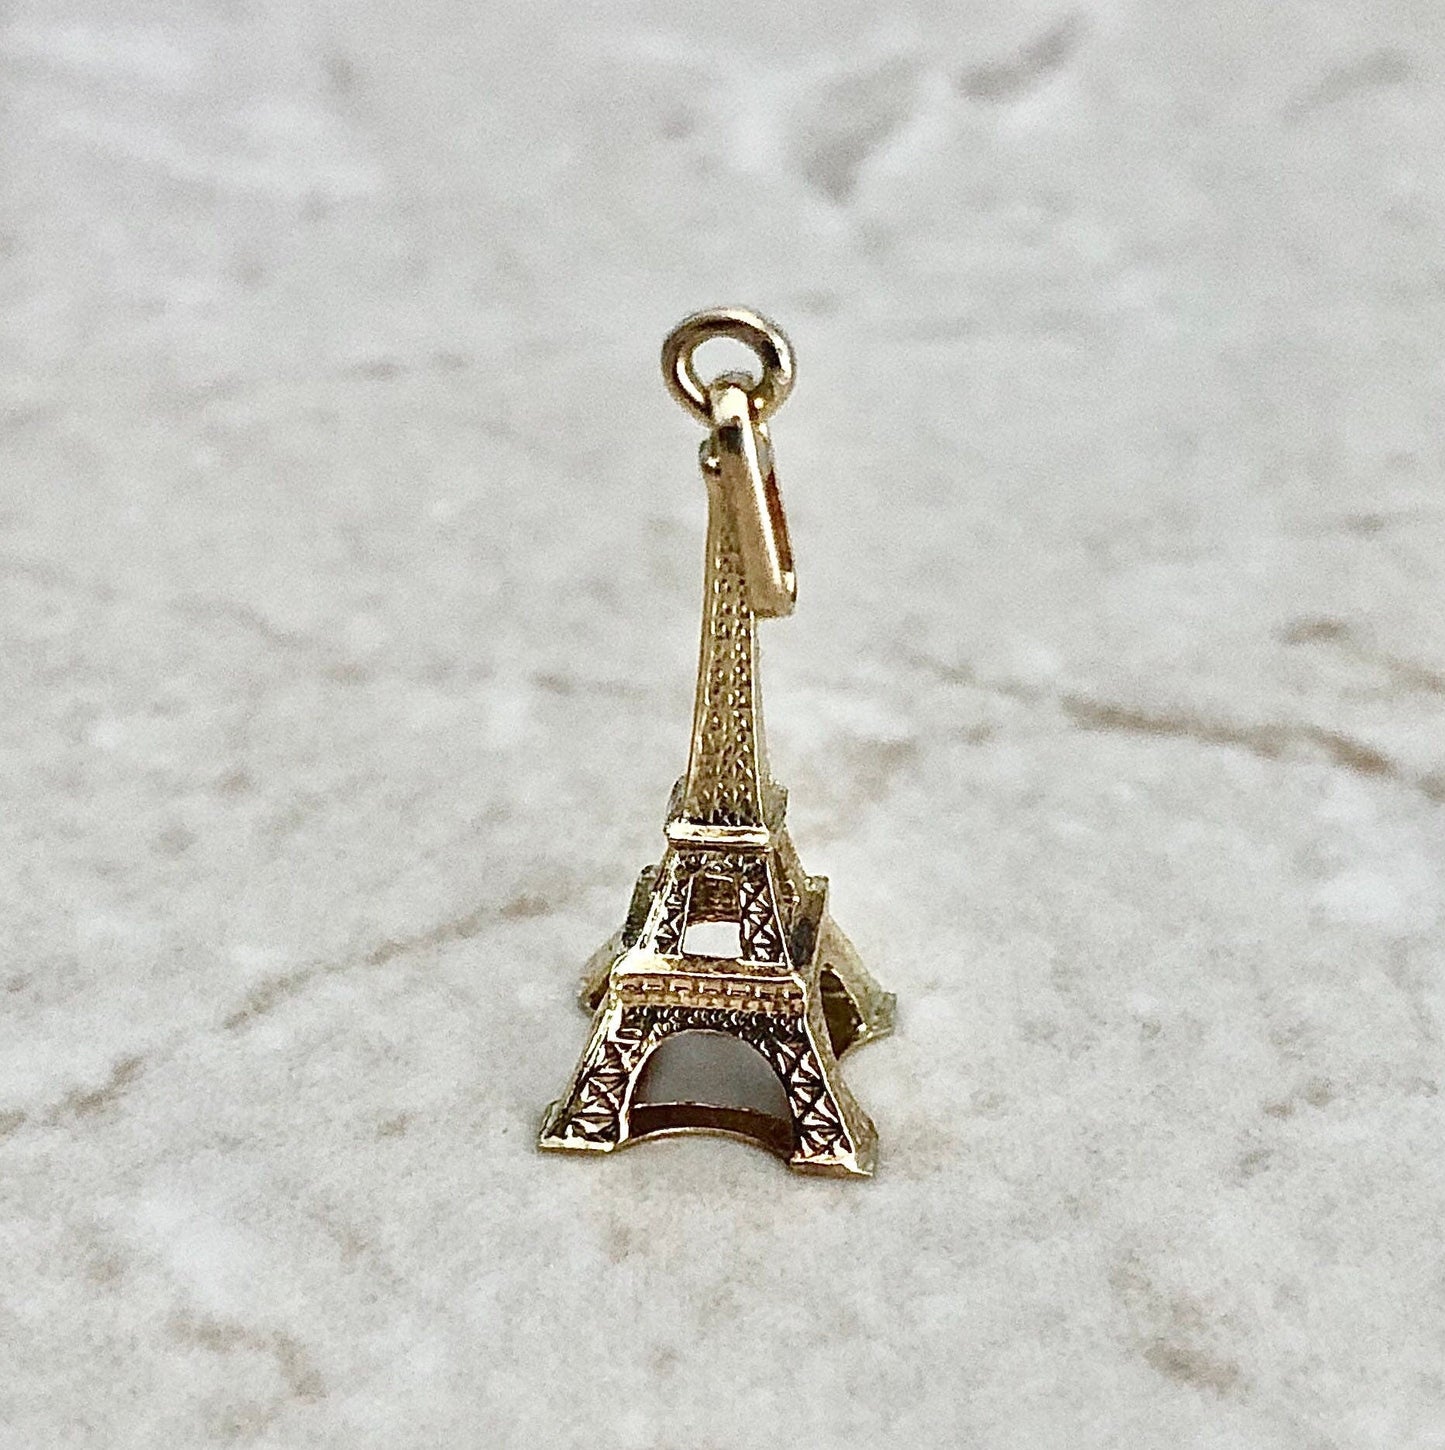 Rare Vintage French 22 Karat Yellow Gold Eiffel Tower Charm Pendant Necklace - Unisex Pendant - Birthday Gift - France Charm - Paris Charm